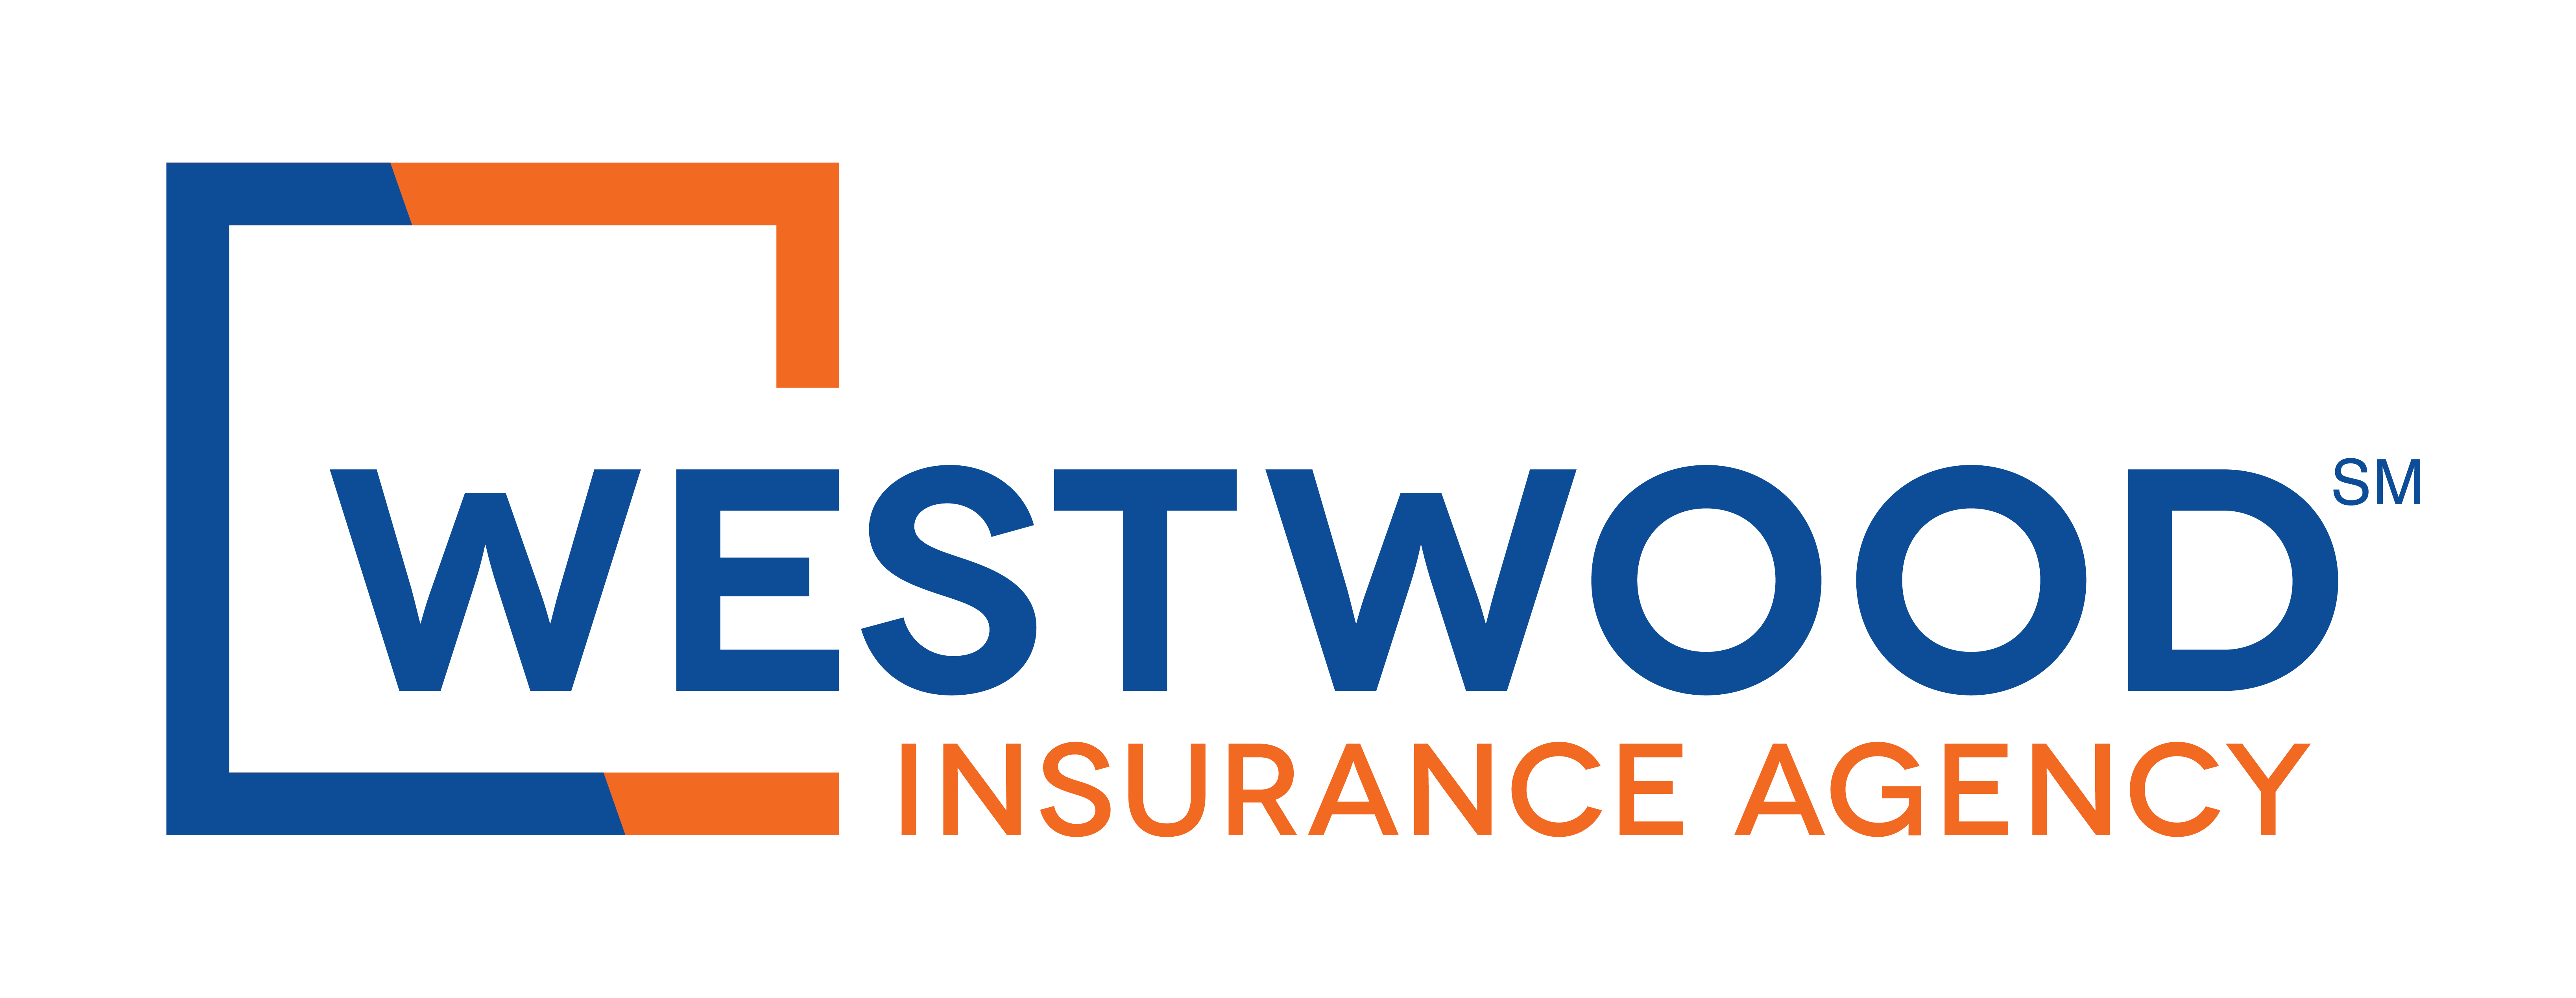 Westwood Insurance Agency